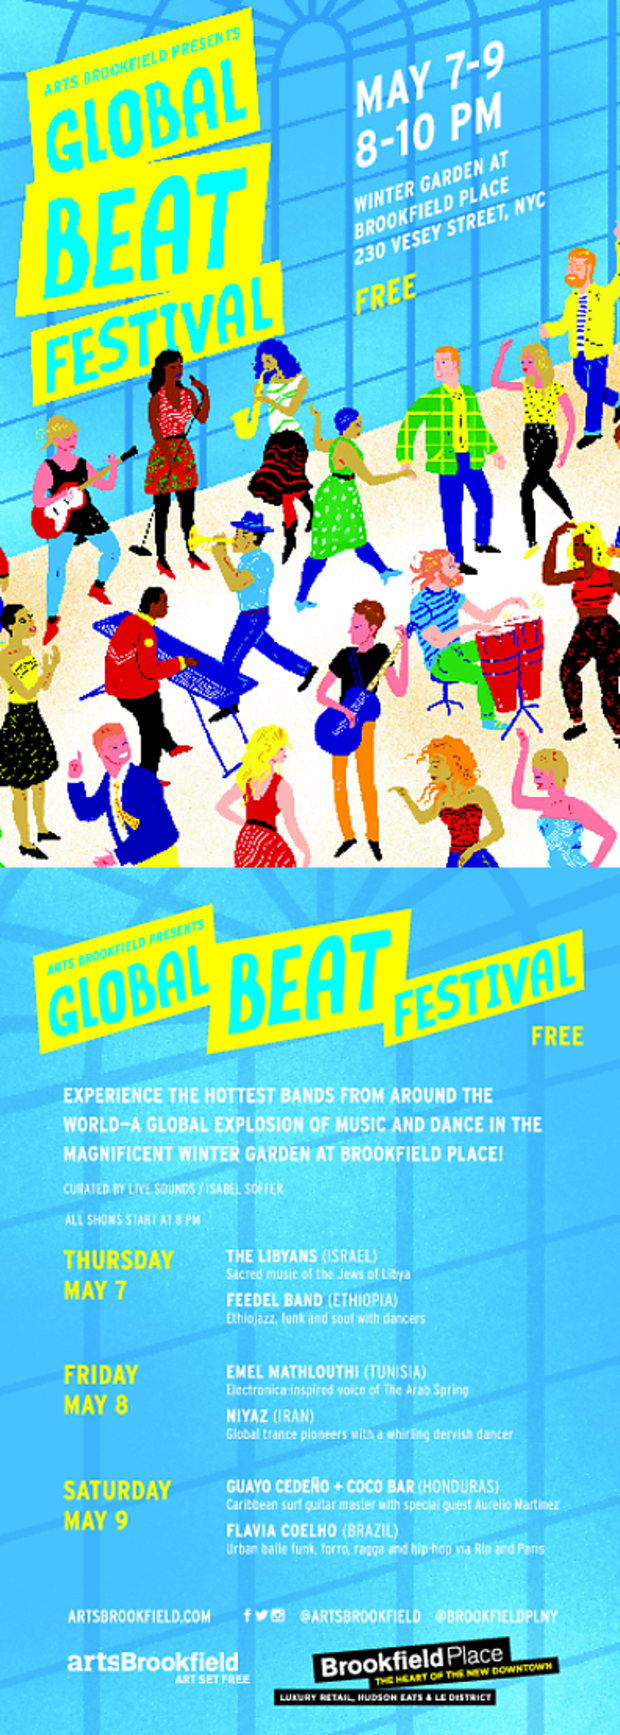 GlobalBeatFestival 